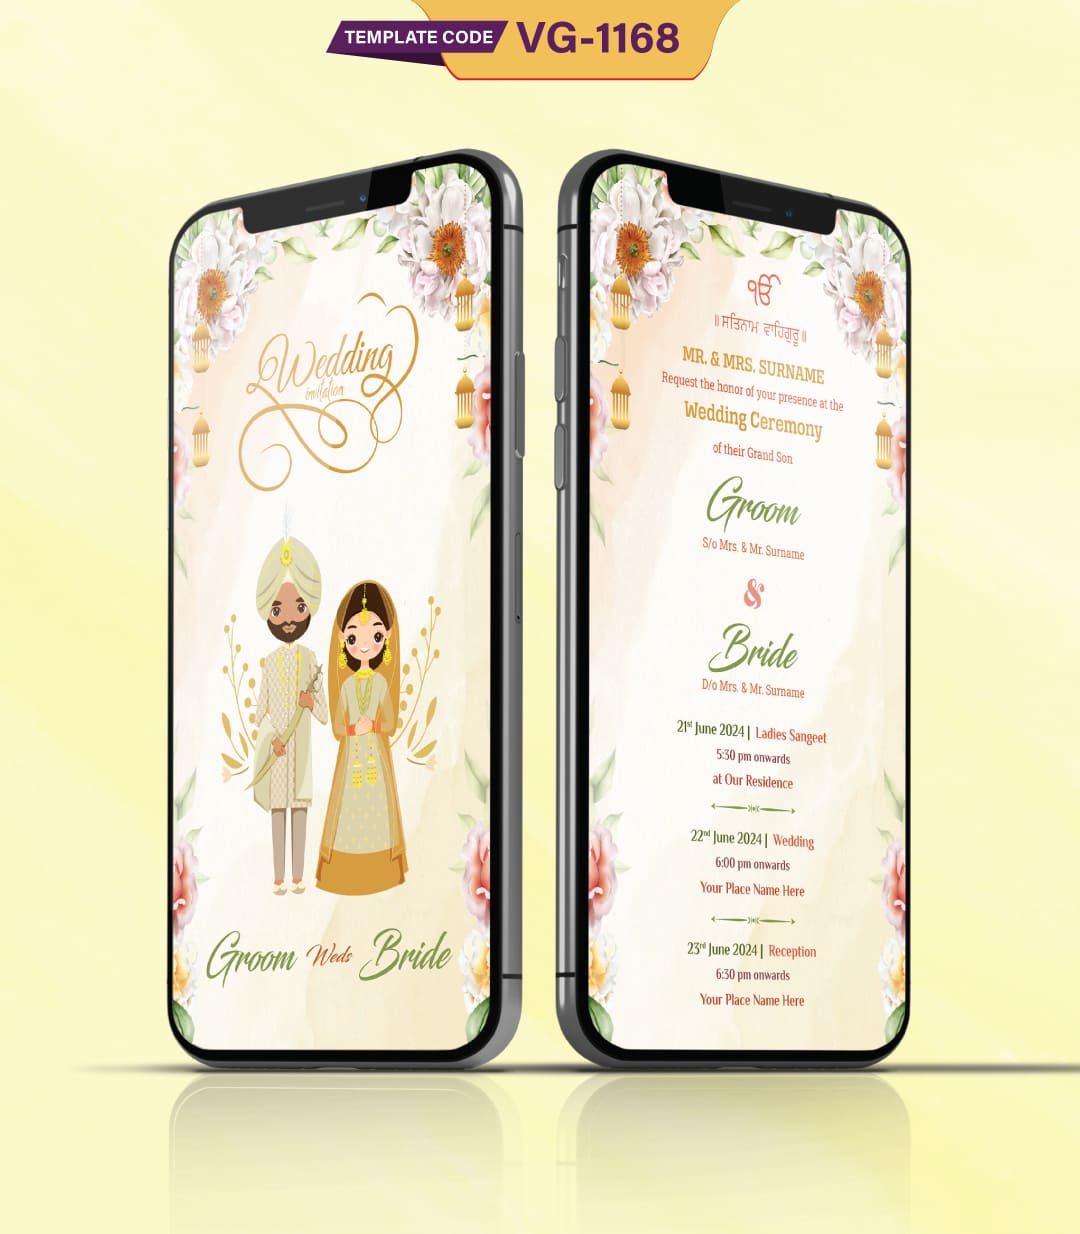 Couple Sikh Wedding Invitation Card